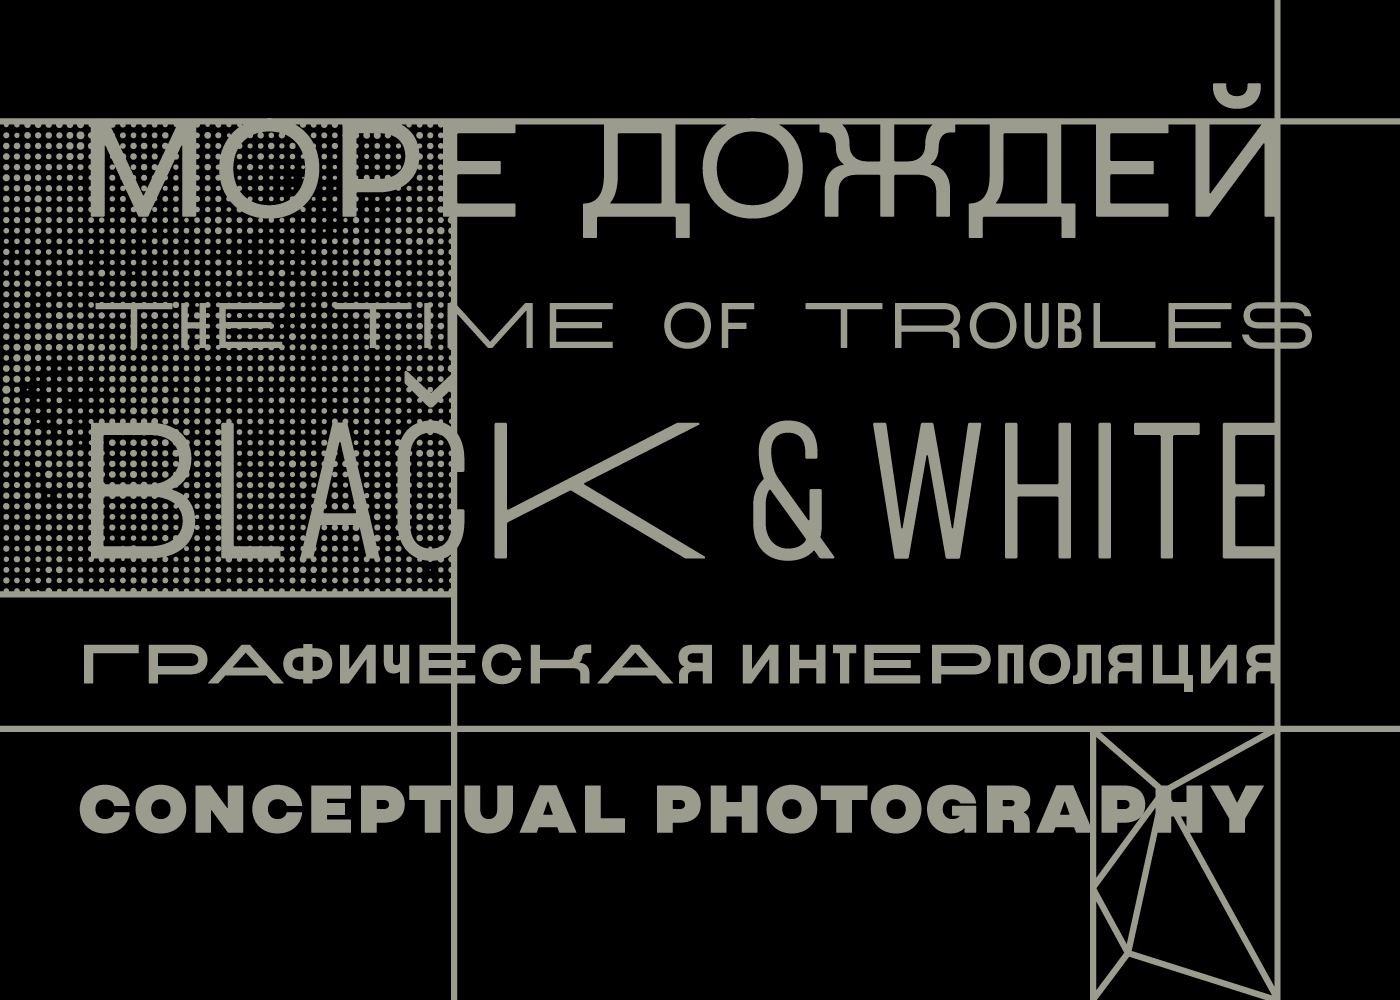 Cyrillic Display font grotesk sans type Typeface